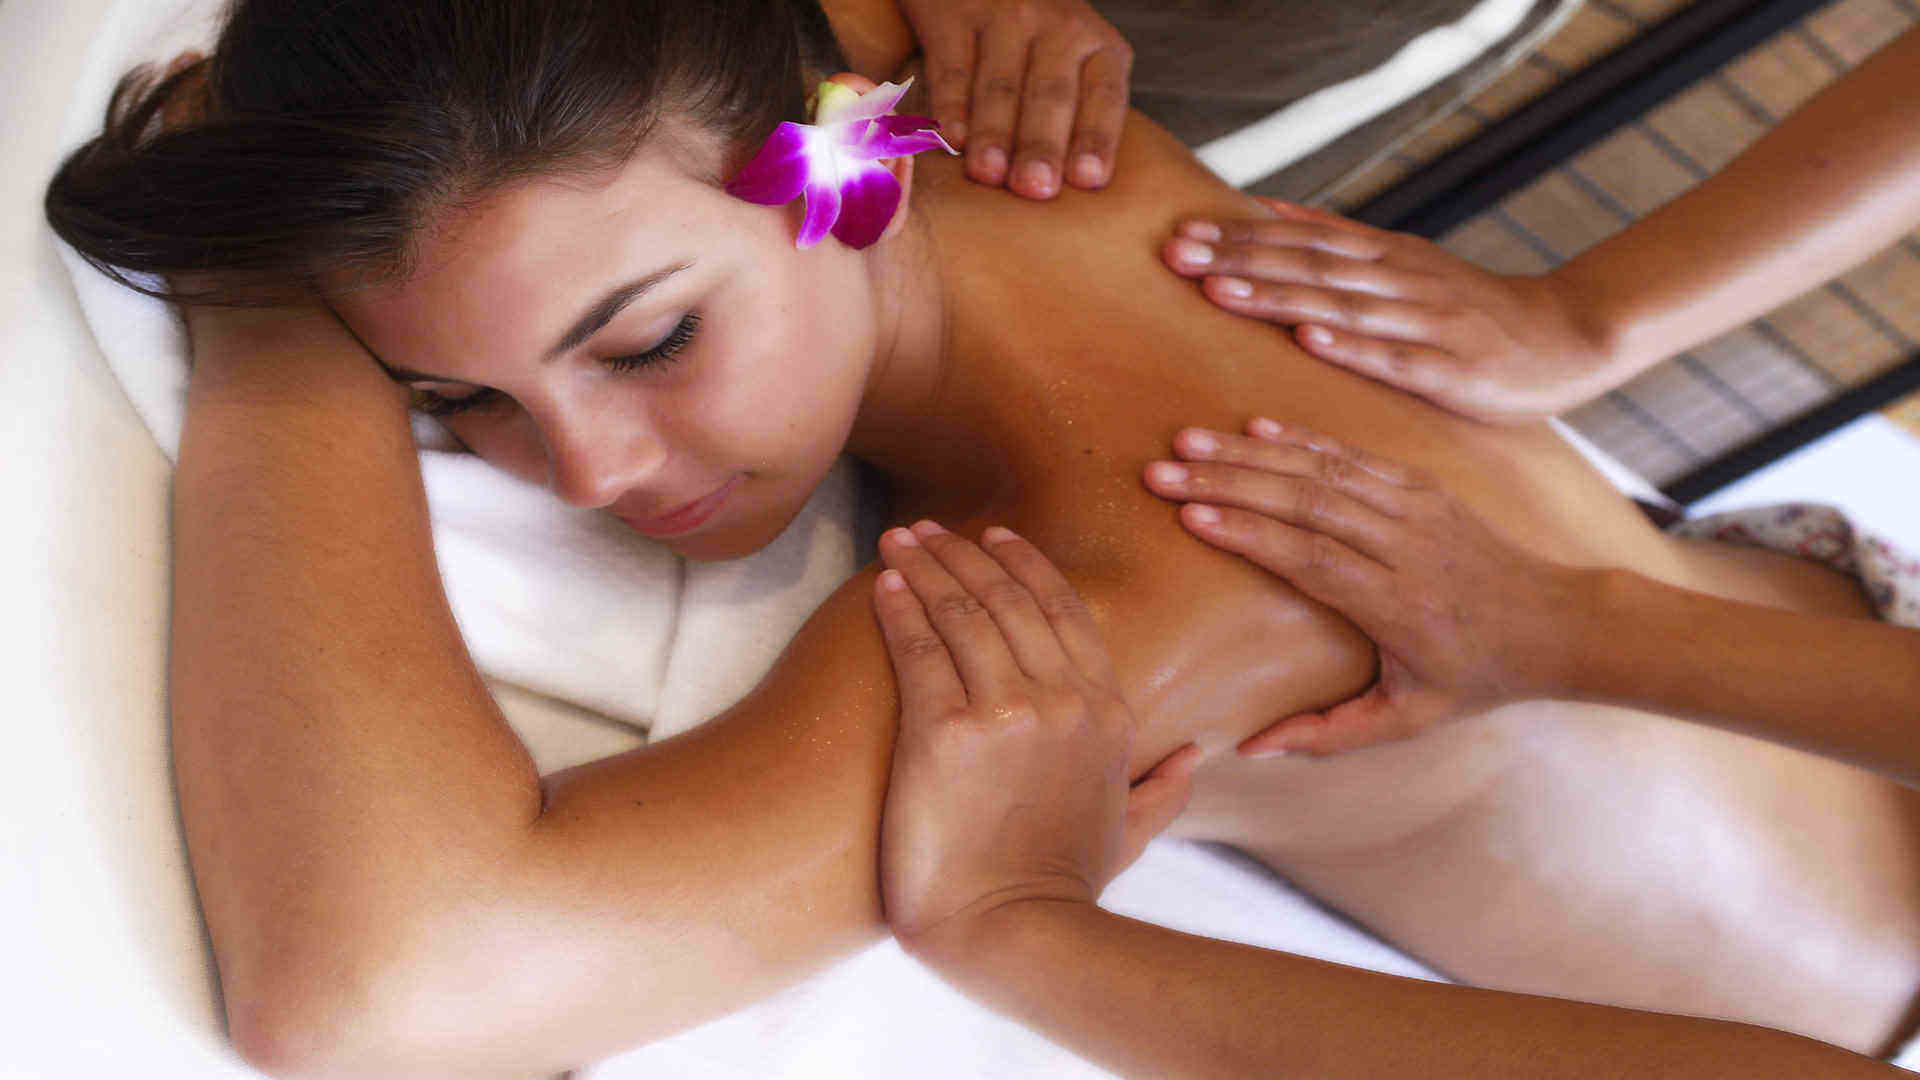 Four Hands Massage Service At Lavender Spa al barsha - Dubai